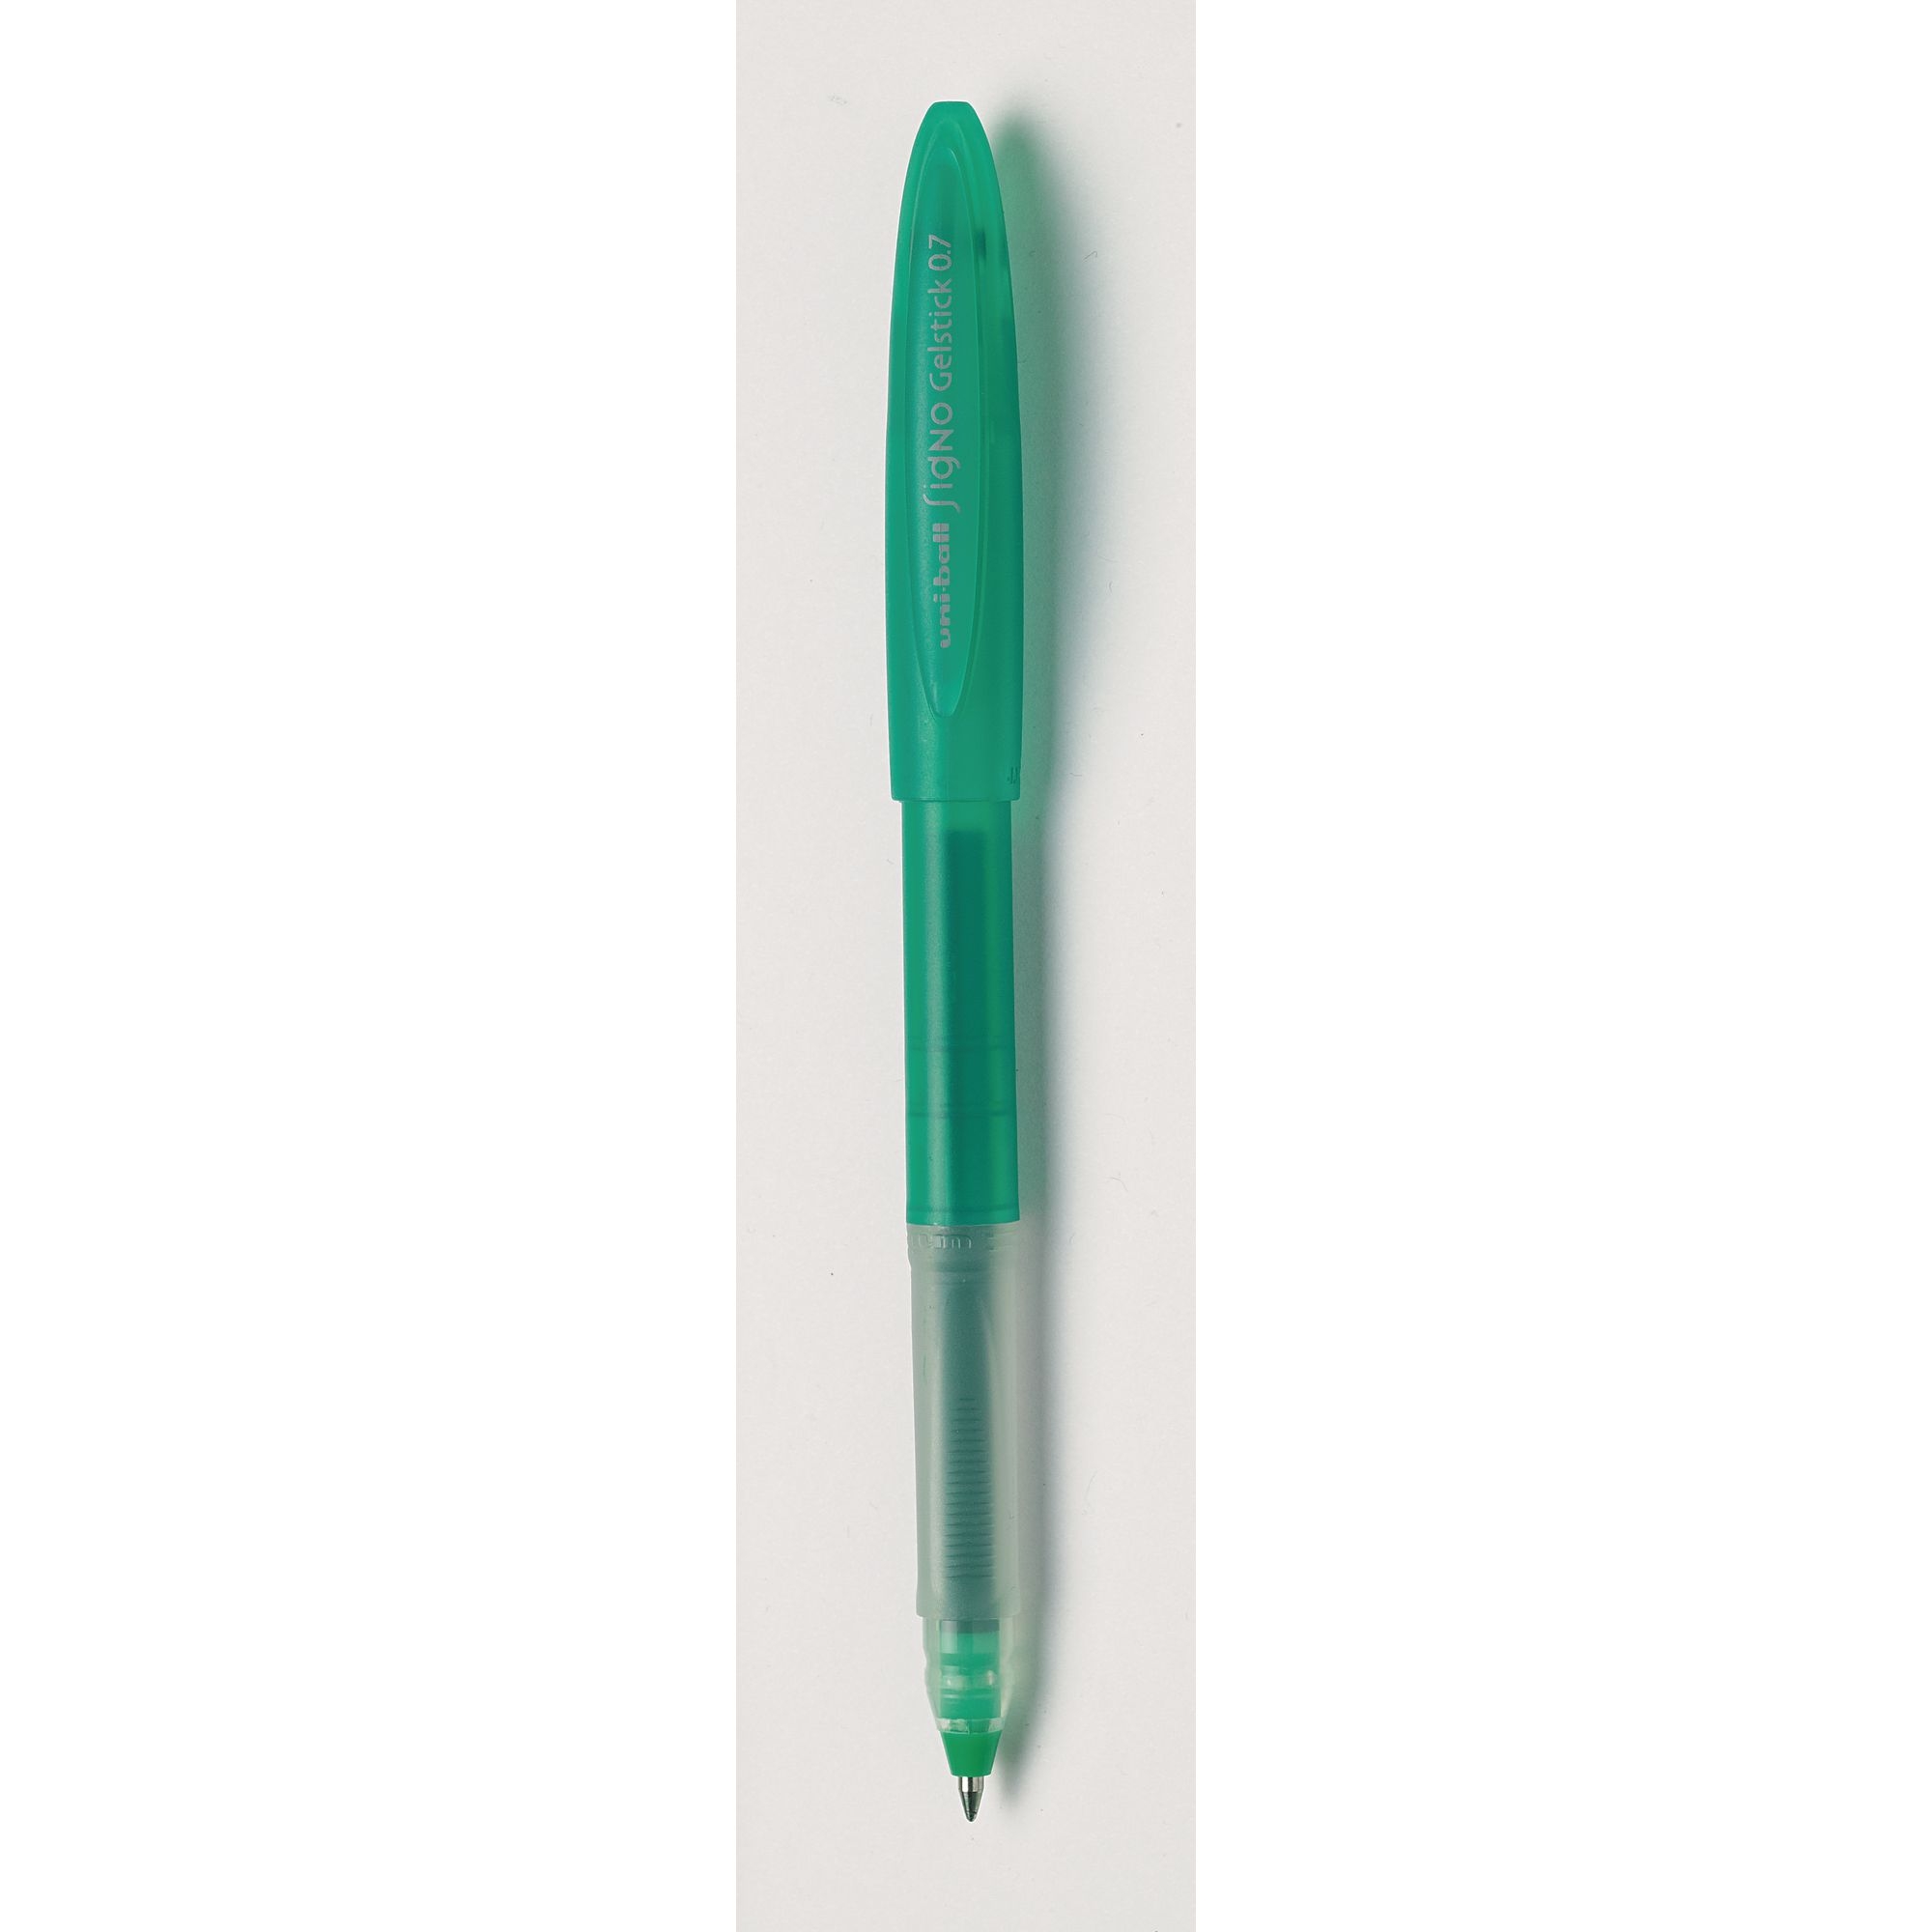 Uni-ball Signo Gelstick Rollerball Pen Green - Pack of 12